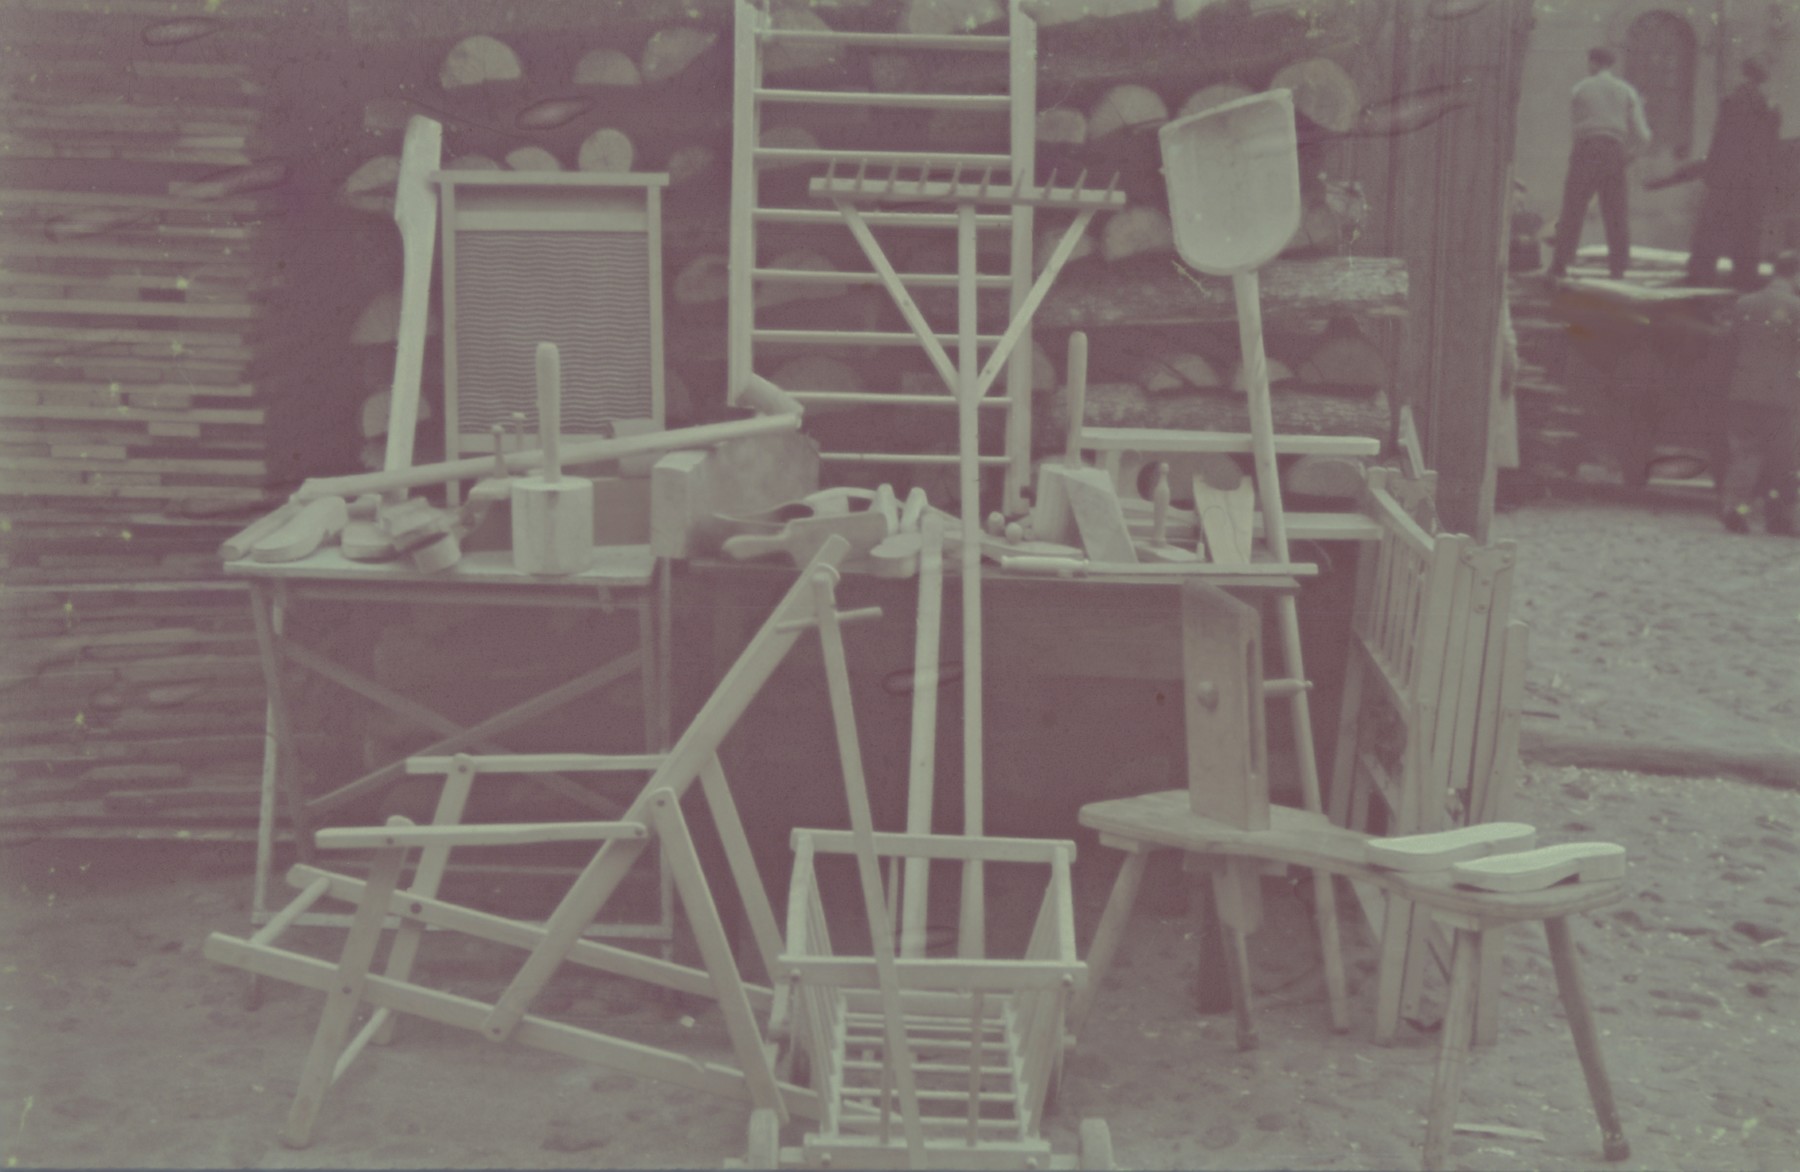 A display of products produced in the Lodz ghetto carpenter's shop.

Original German caption: "Litzmannstadt getto, Erzeugnisse der Holzwerkstaetten" (products of  the wood workshop), #14.